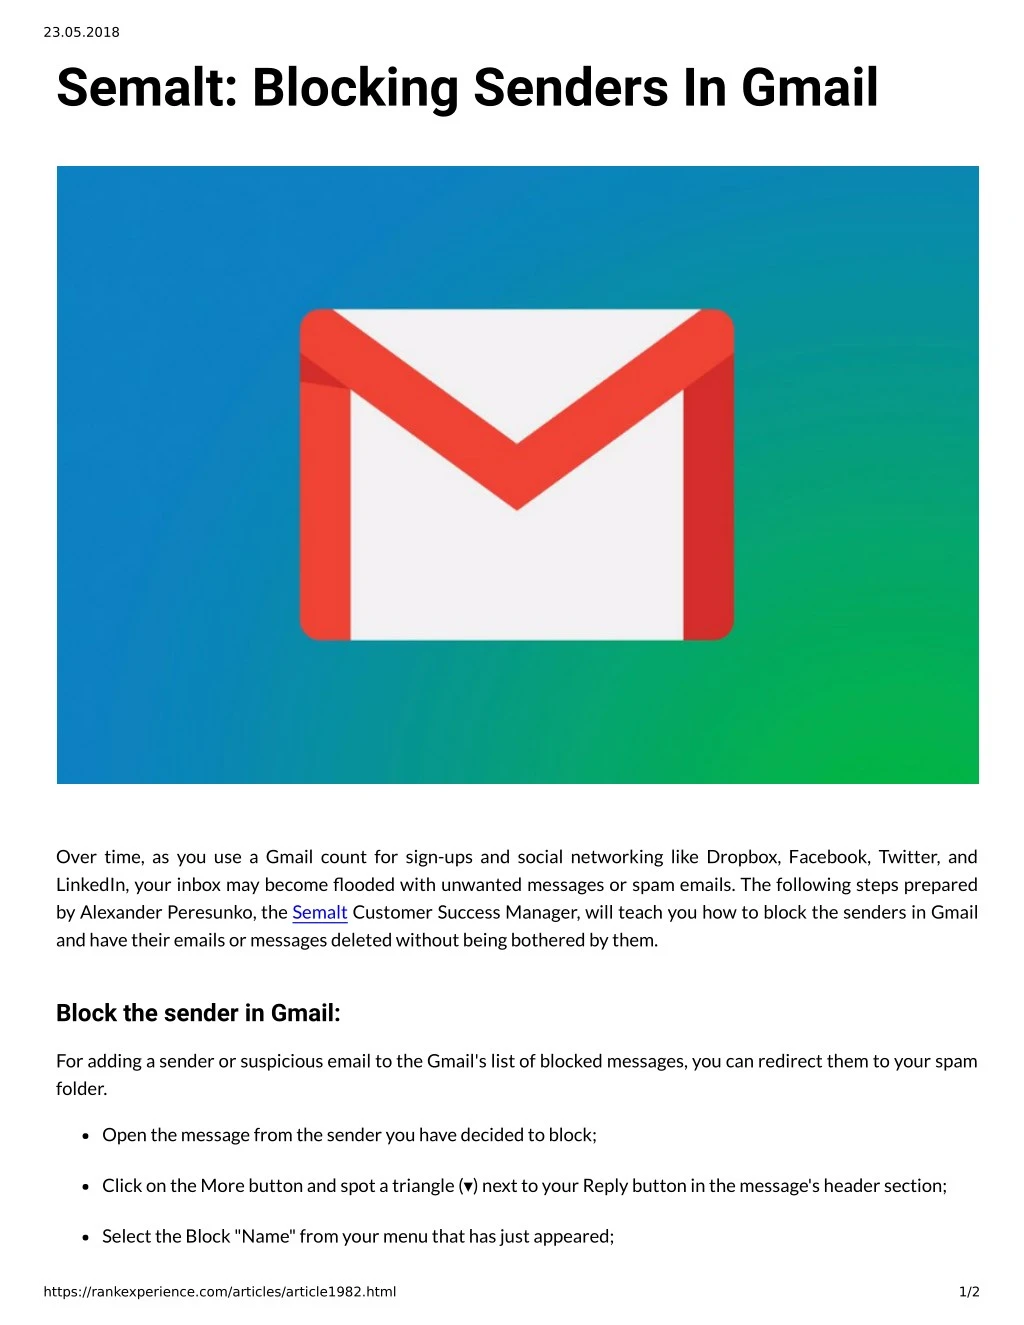 23 05 2018 semalt blocking senders in gmail